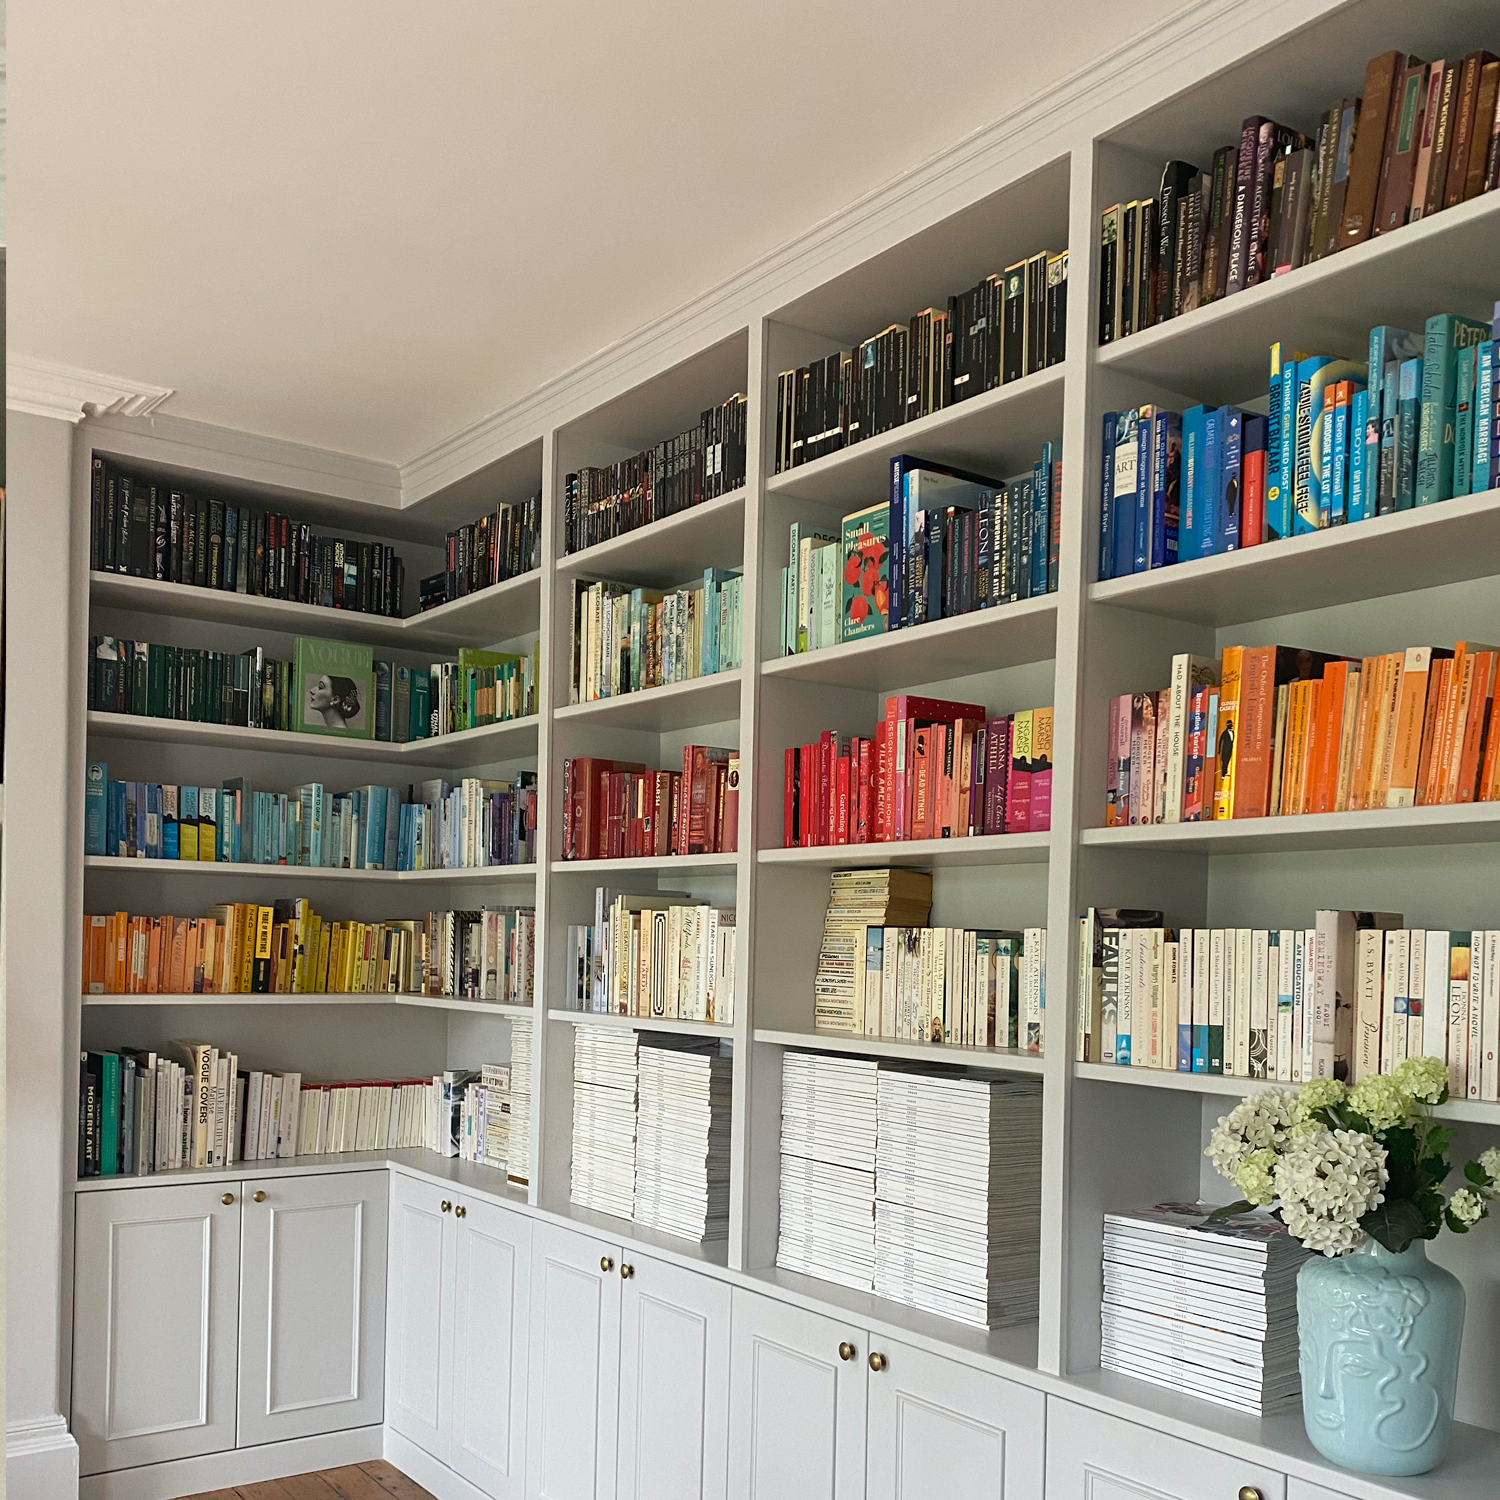 How to Organize Your Bookshelves, According to Interior Designers